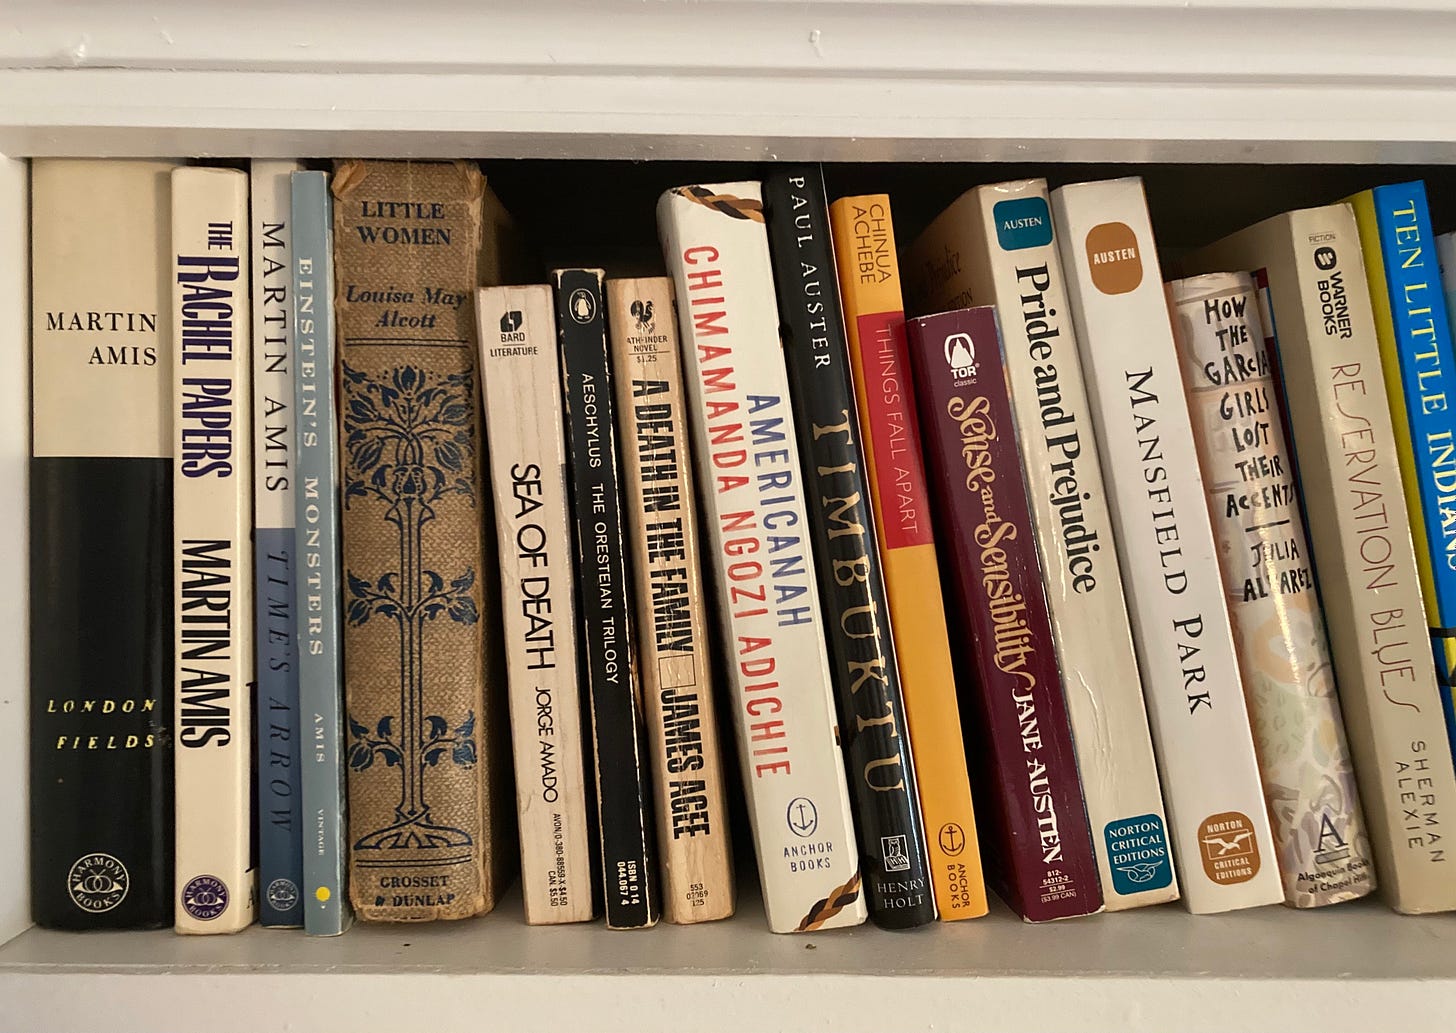 Books on a bookshelf, including four Amis novels